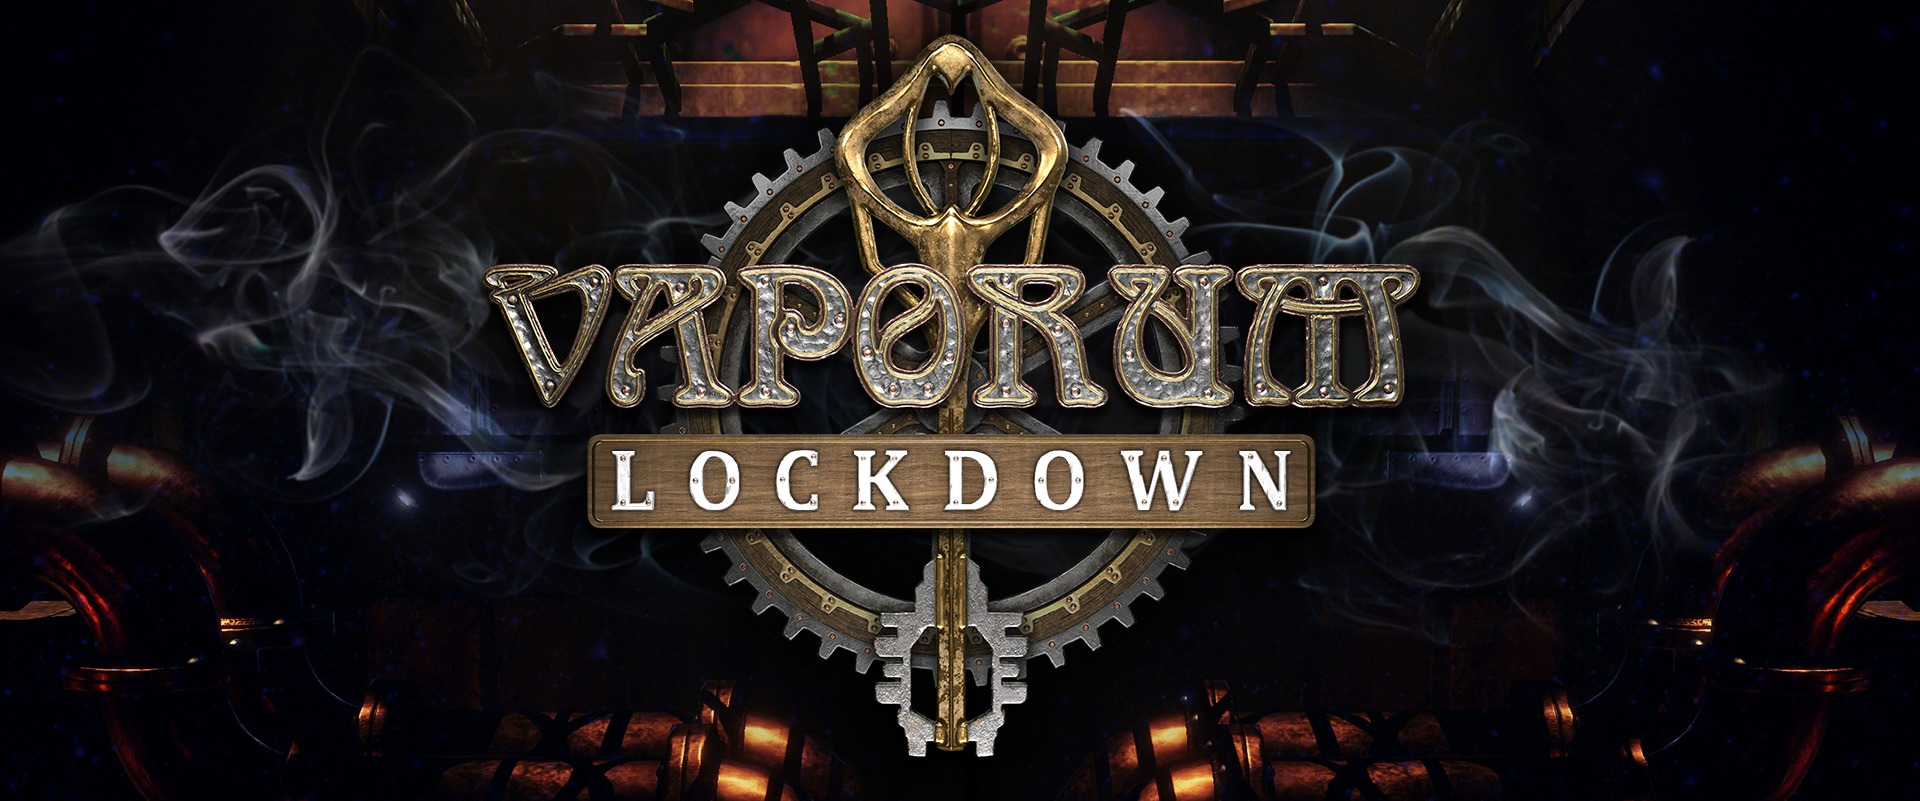 Vaporum: Lockdown Release in Summer 2020!